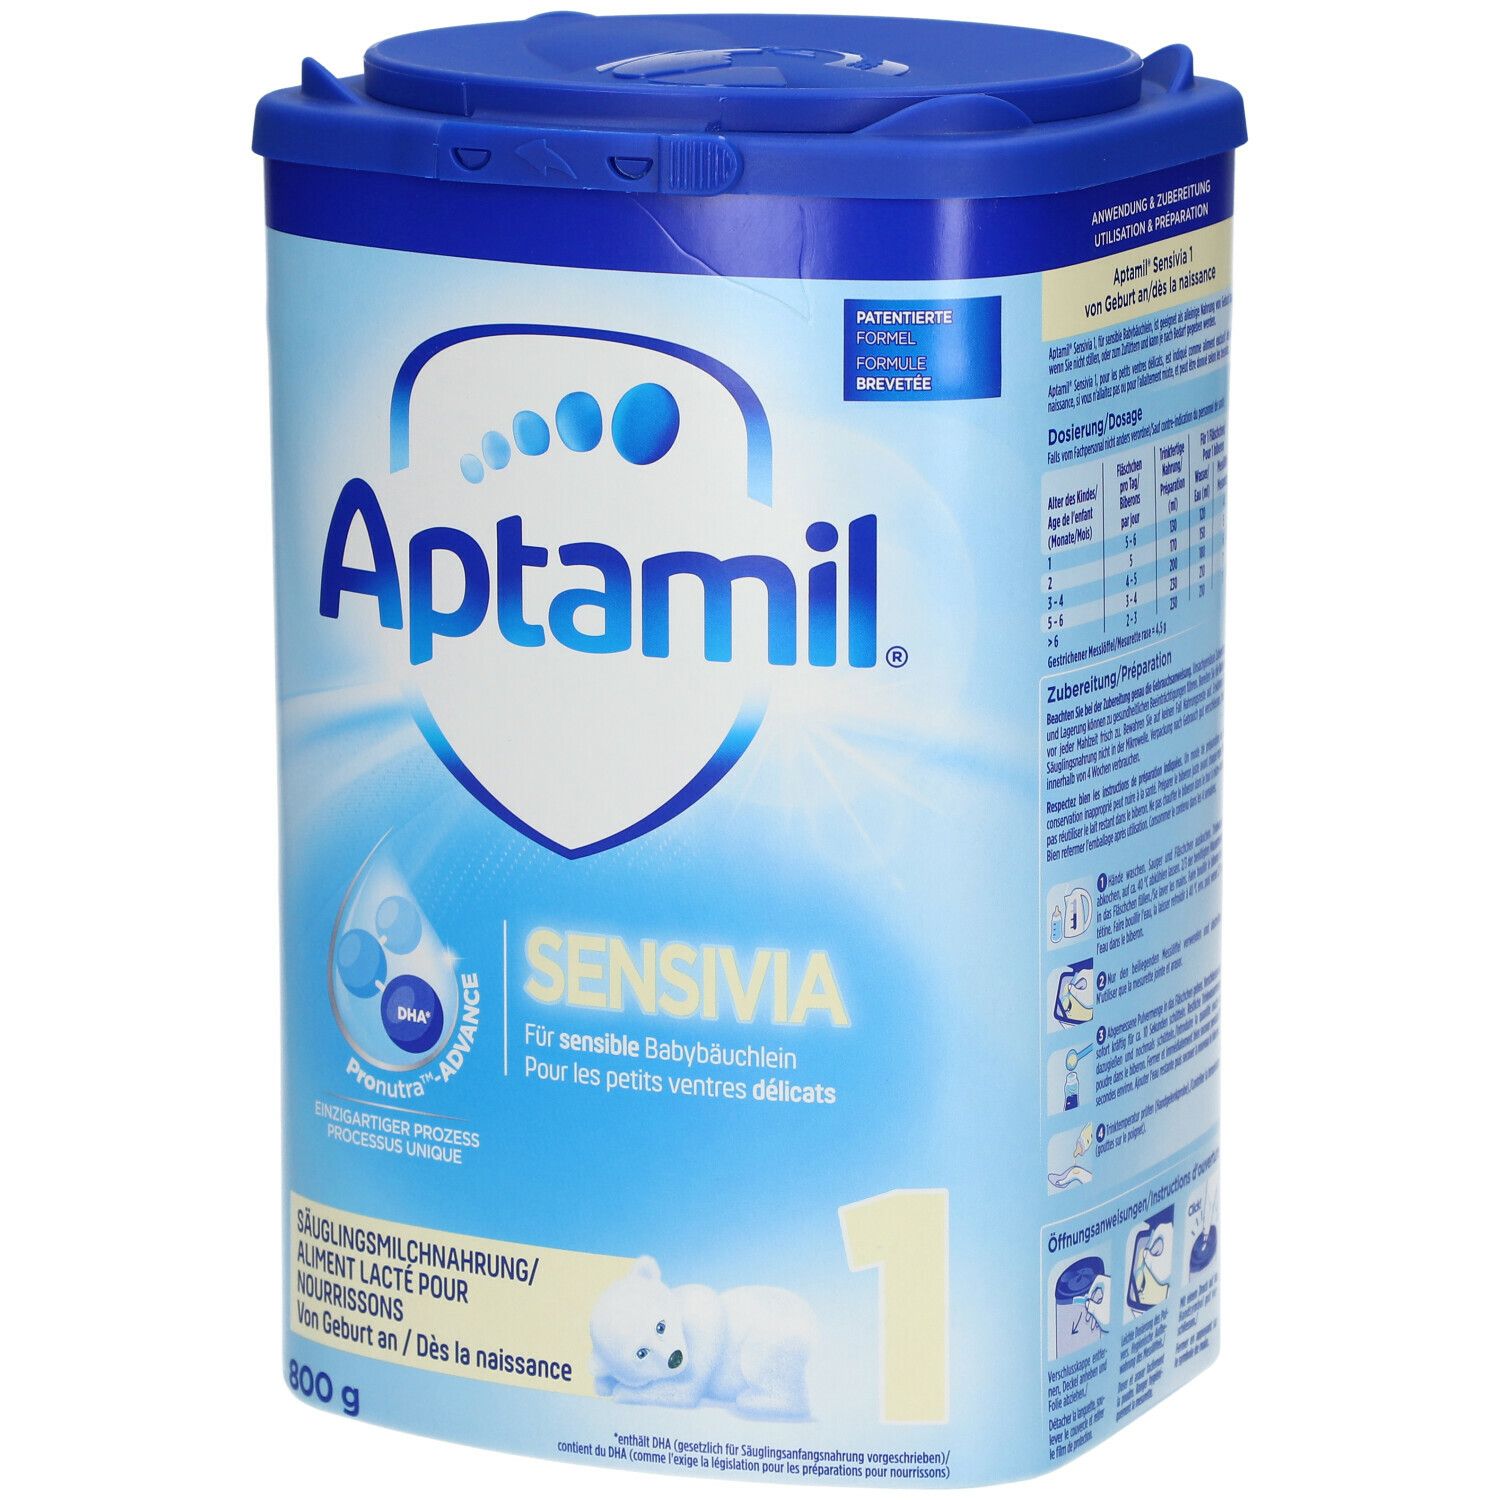 Aptamil® Sensivia 1